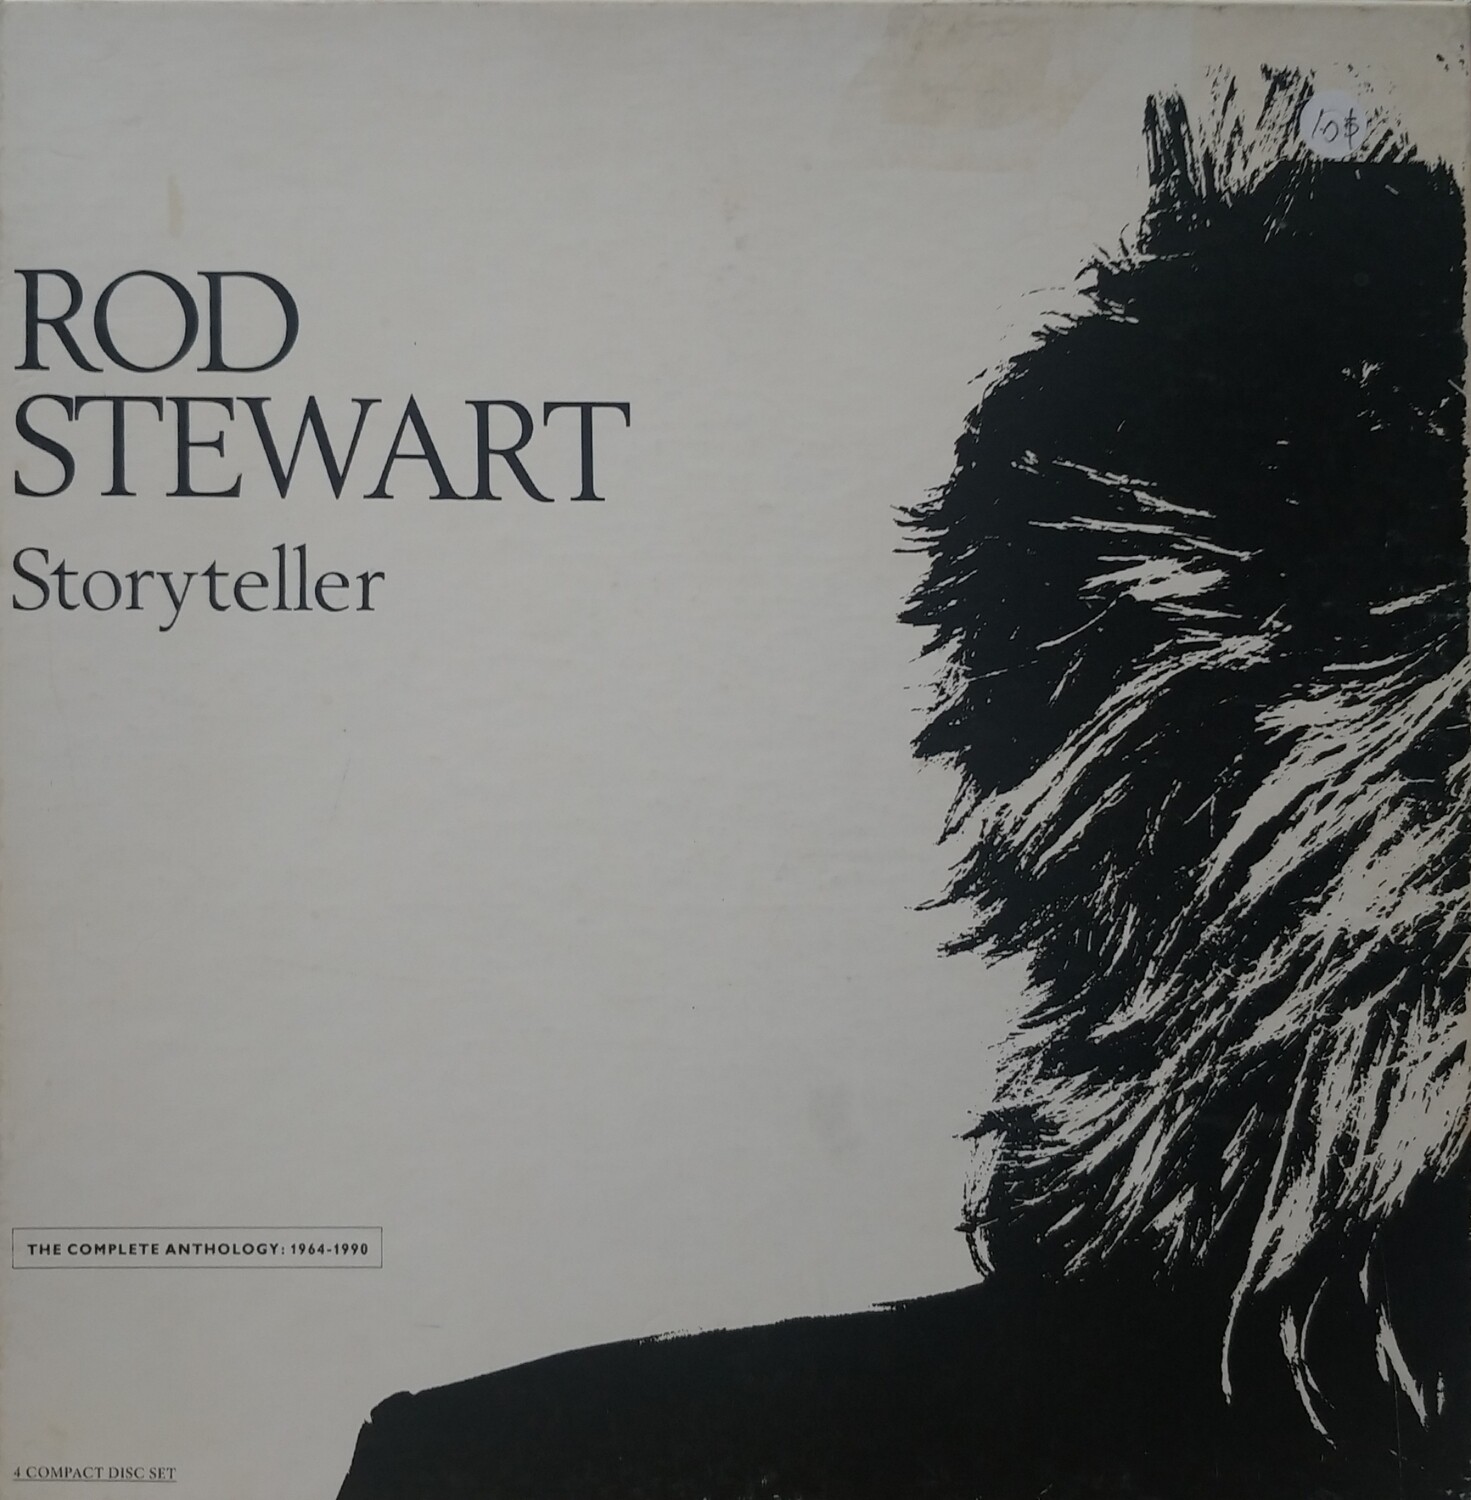 Rod Stewart - Storyteller (Coffret CD)